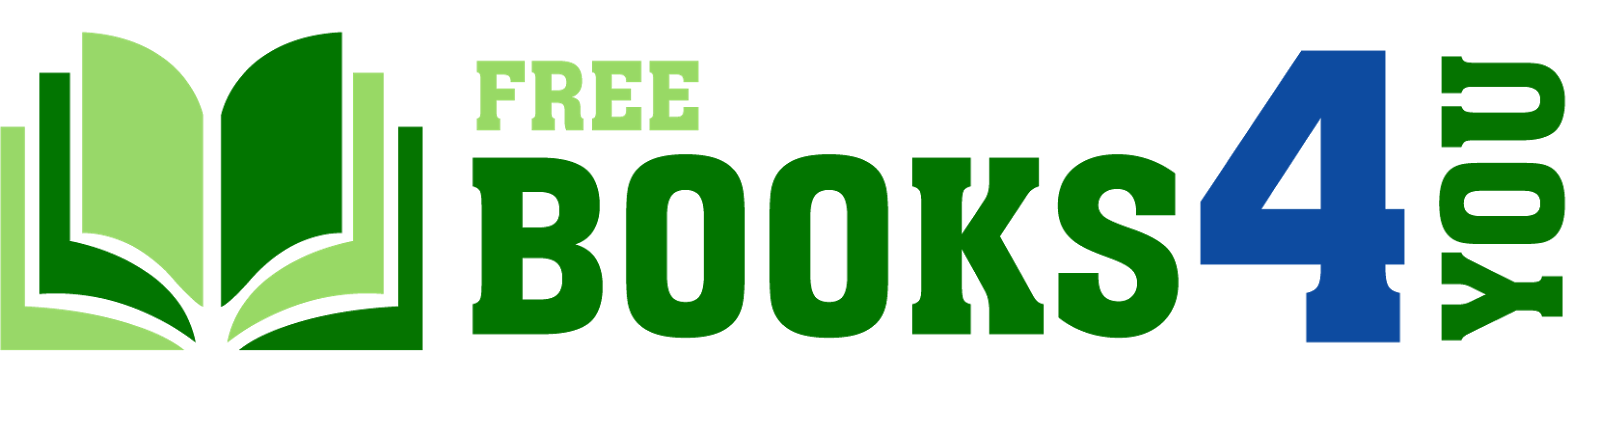 free land books